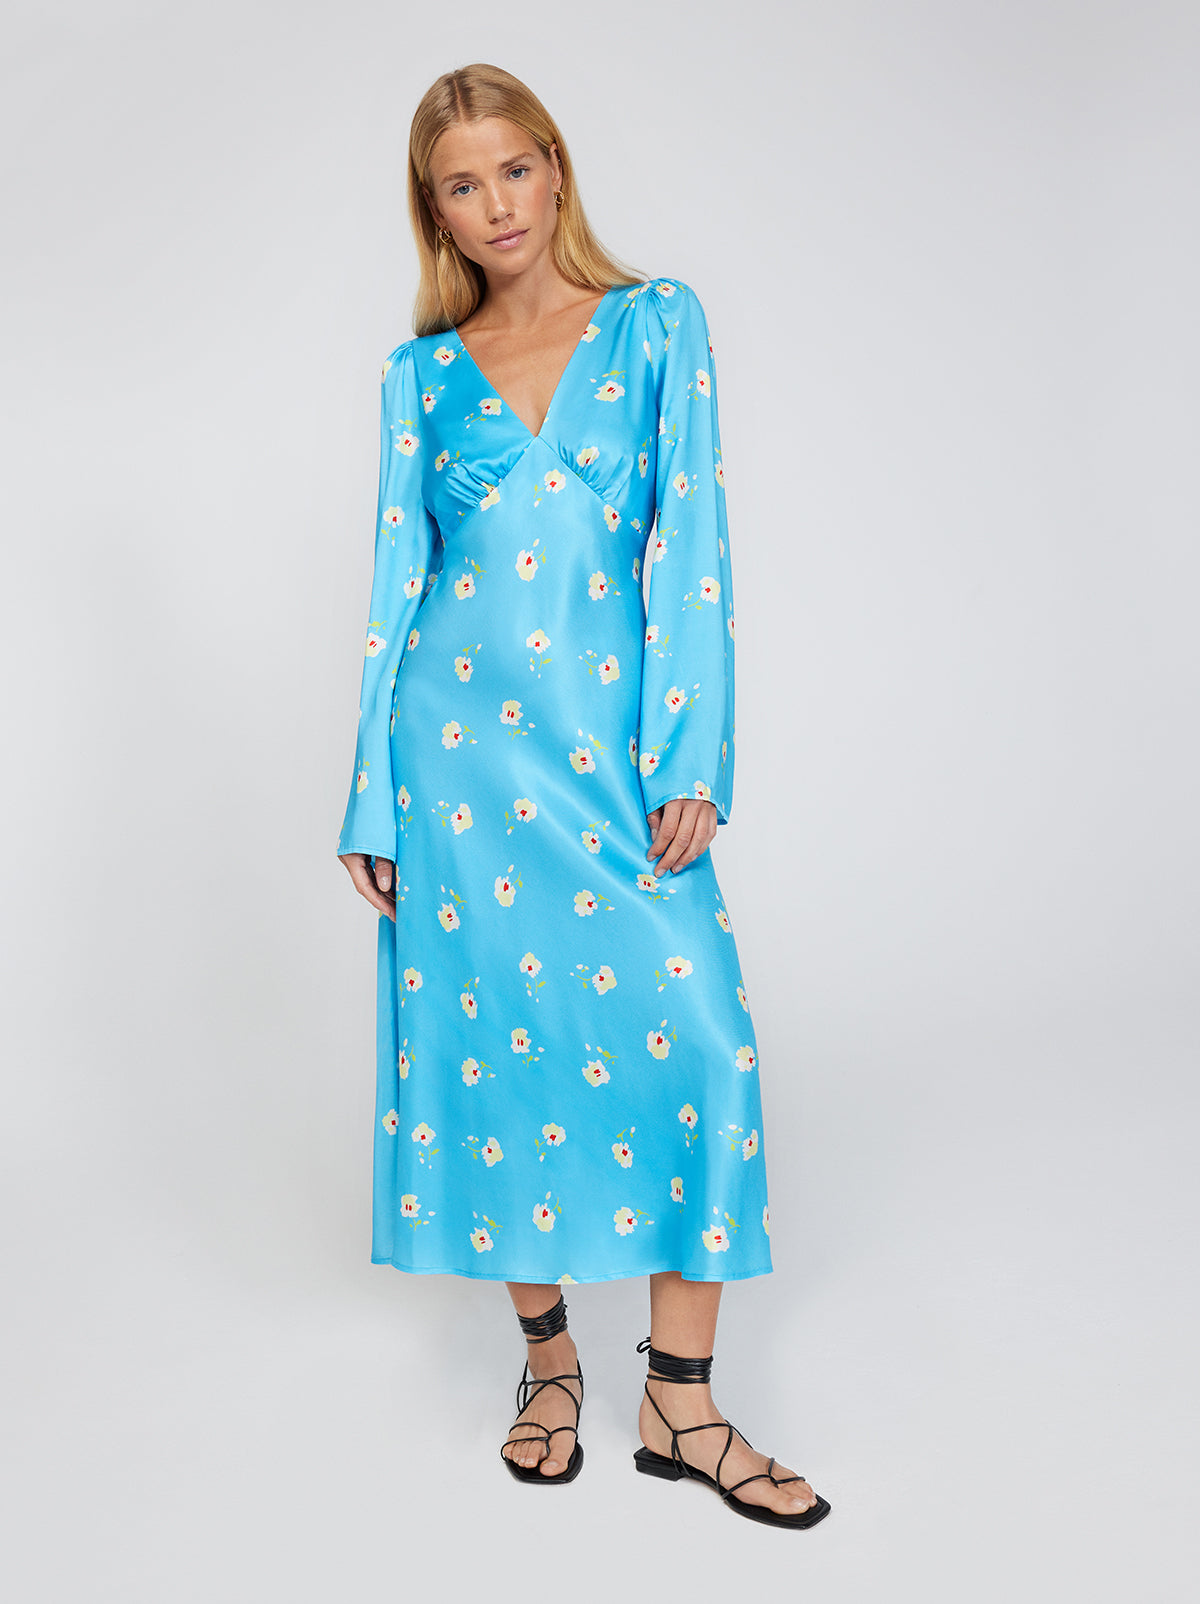 Libby Blue Pansy Print Dress